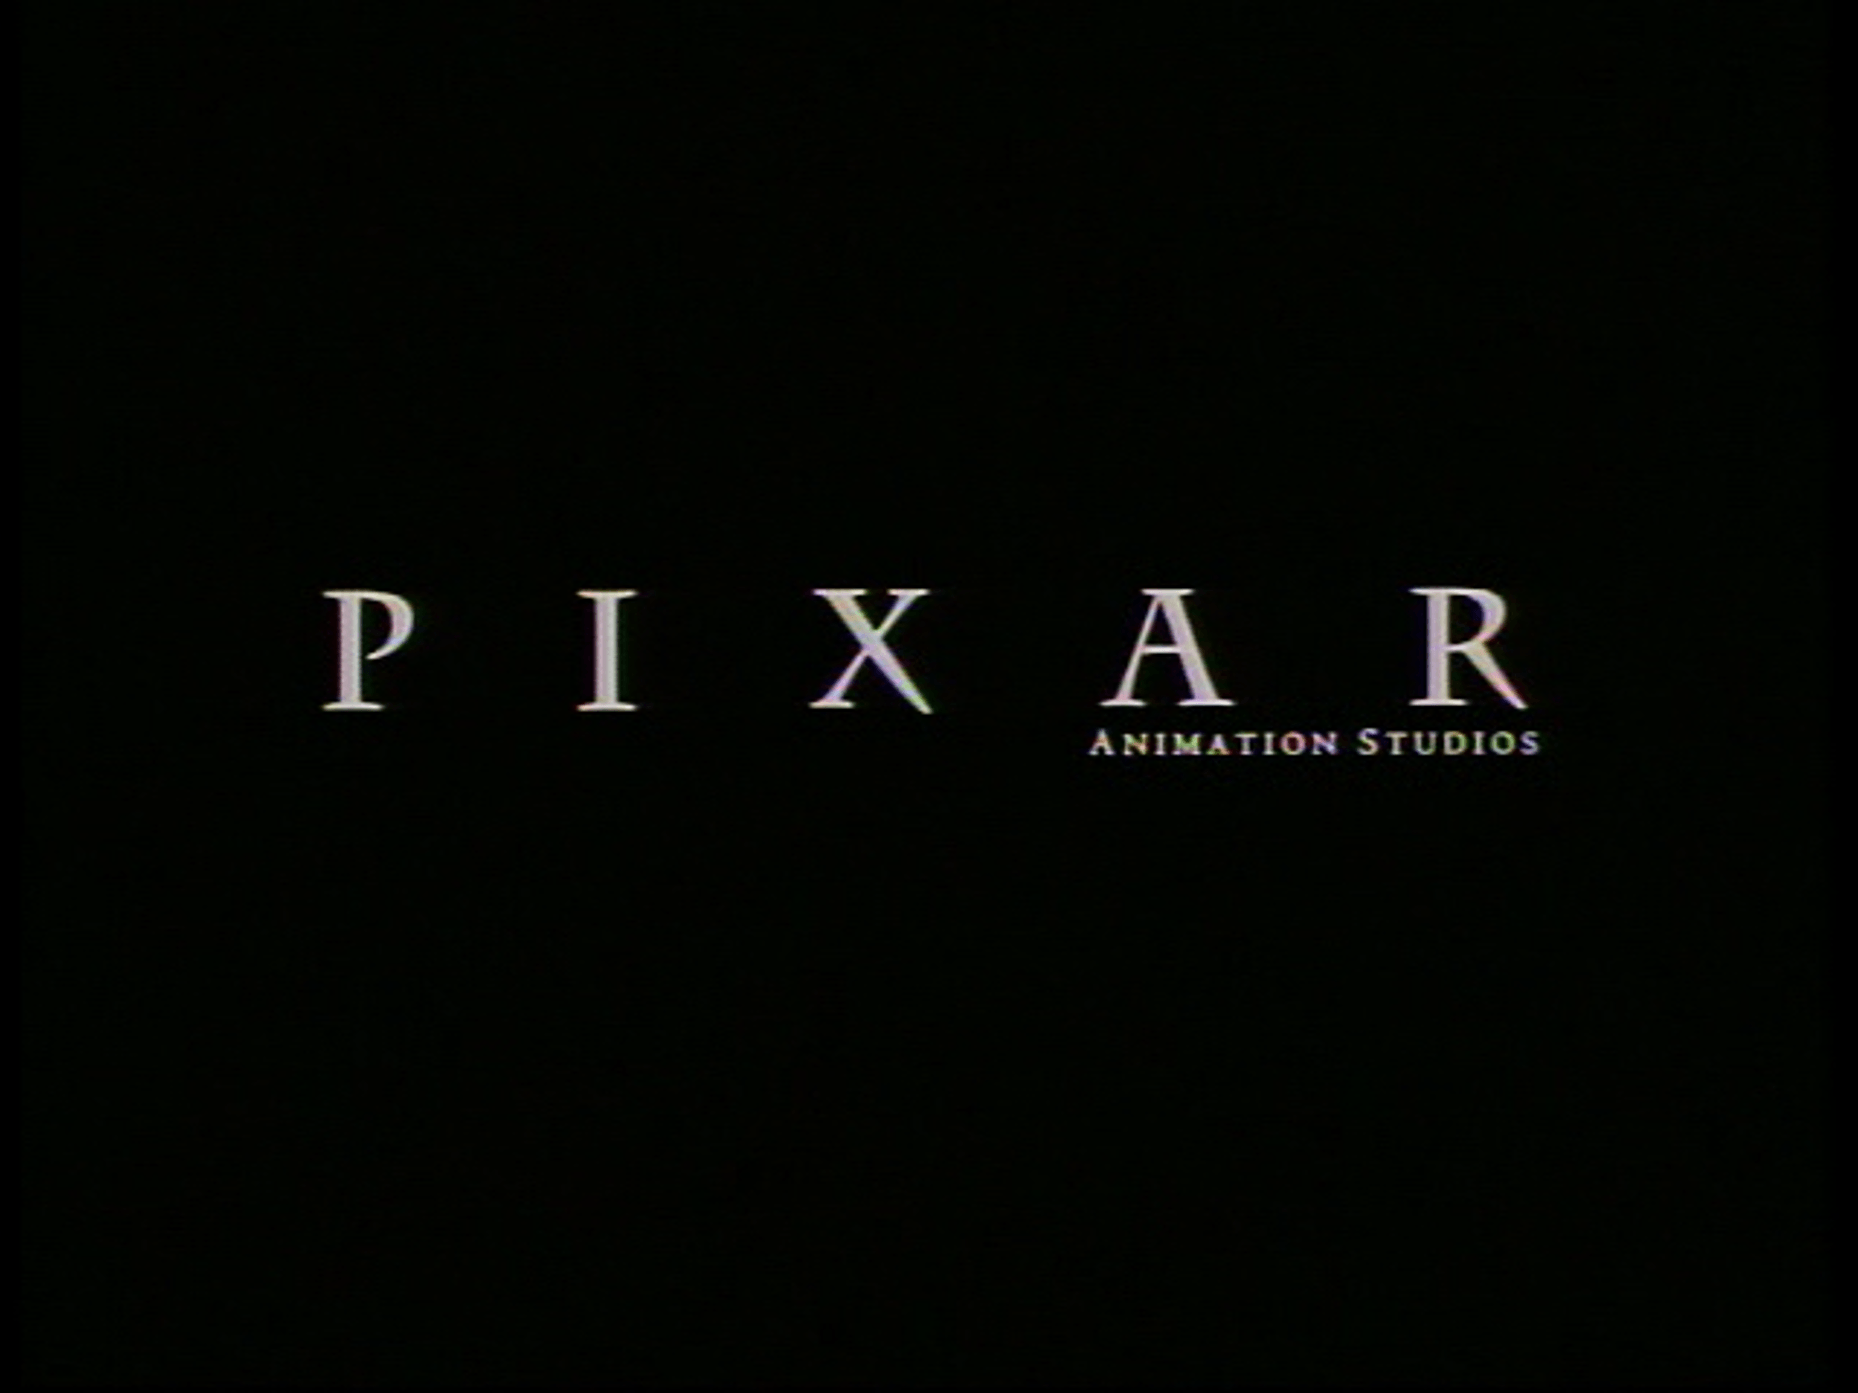 Pixar Logo - PIXAR LOGO (Toy Story Variant).png. Walt Disney